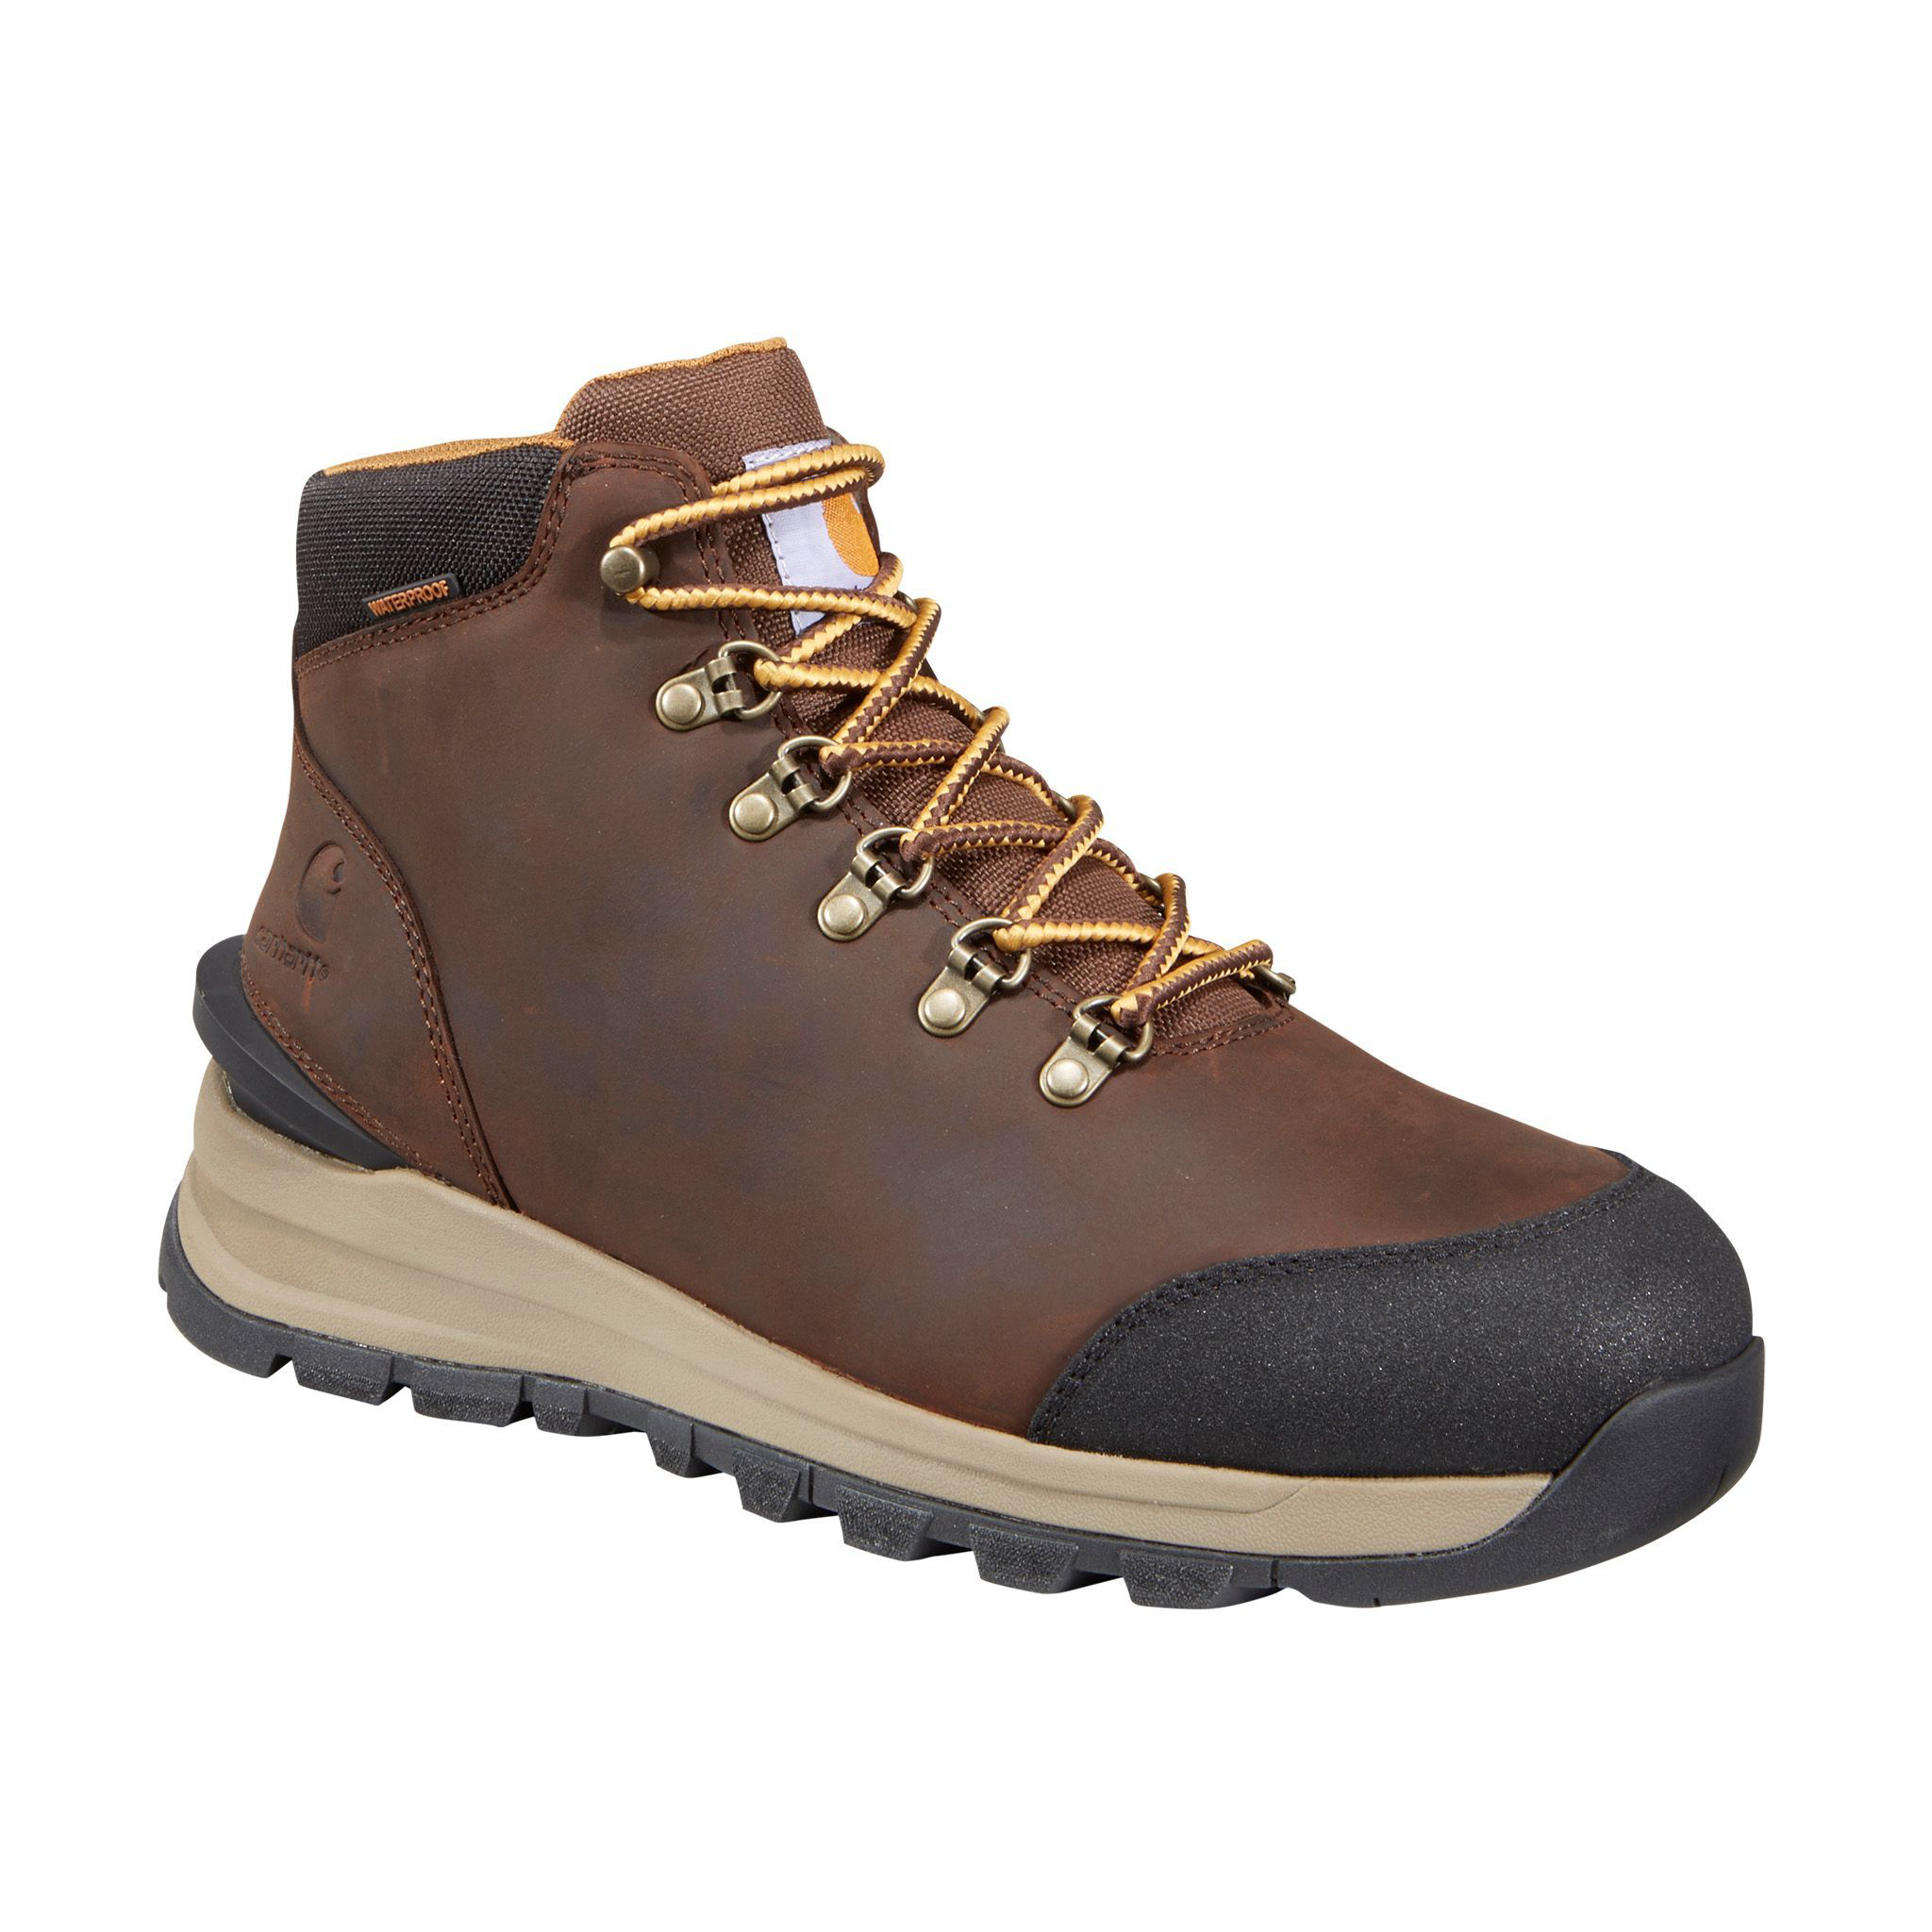 Carhartt Gilmore Waterproof Hiking Boots for Men - Dark Brown Oil Tanned - 15W